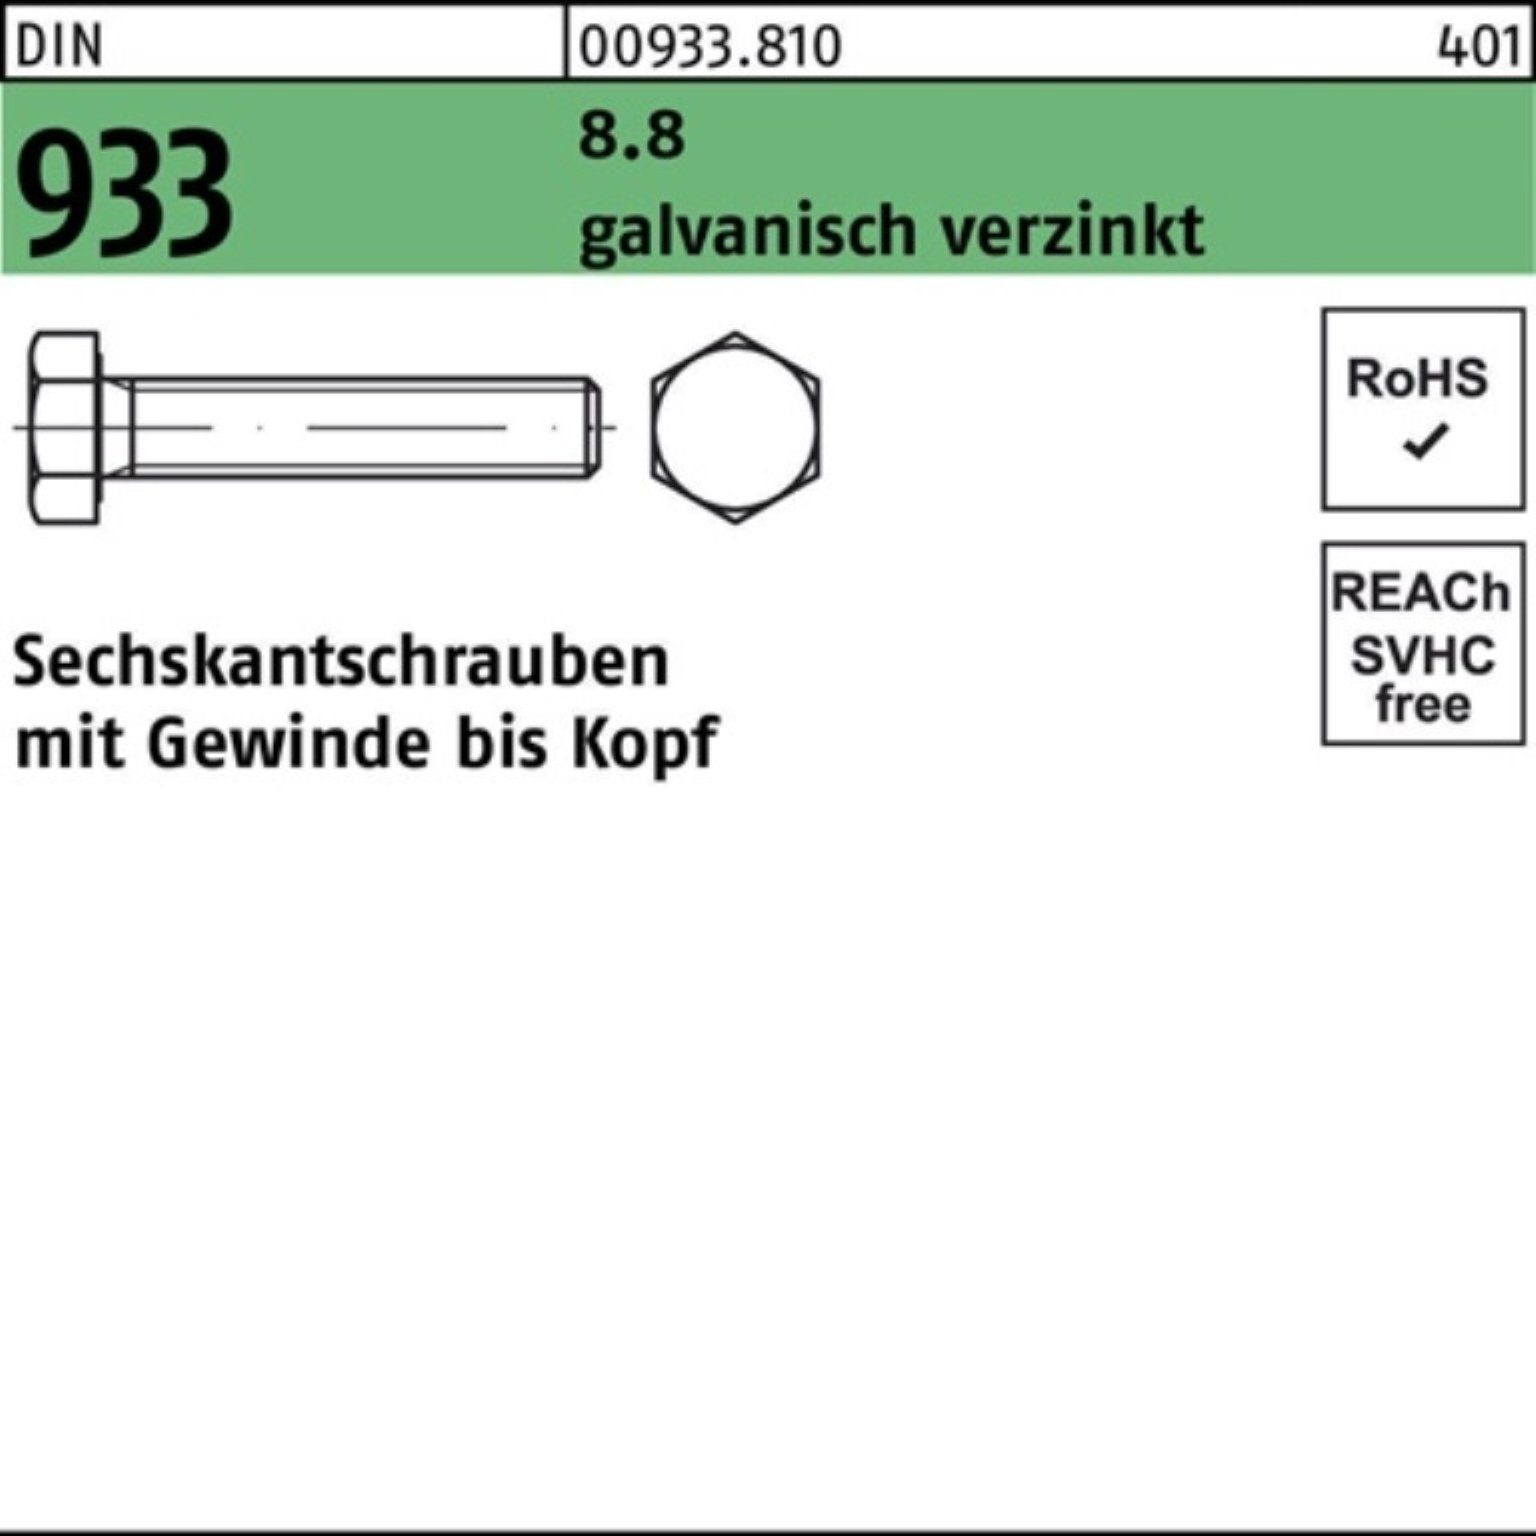 Reyher Sechskantschraube 100er Pack 8.8 VG galv.verz. 170 M8x 933 DIN Sechskantschraube St 100